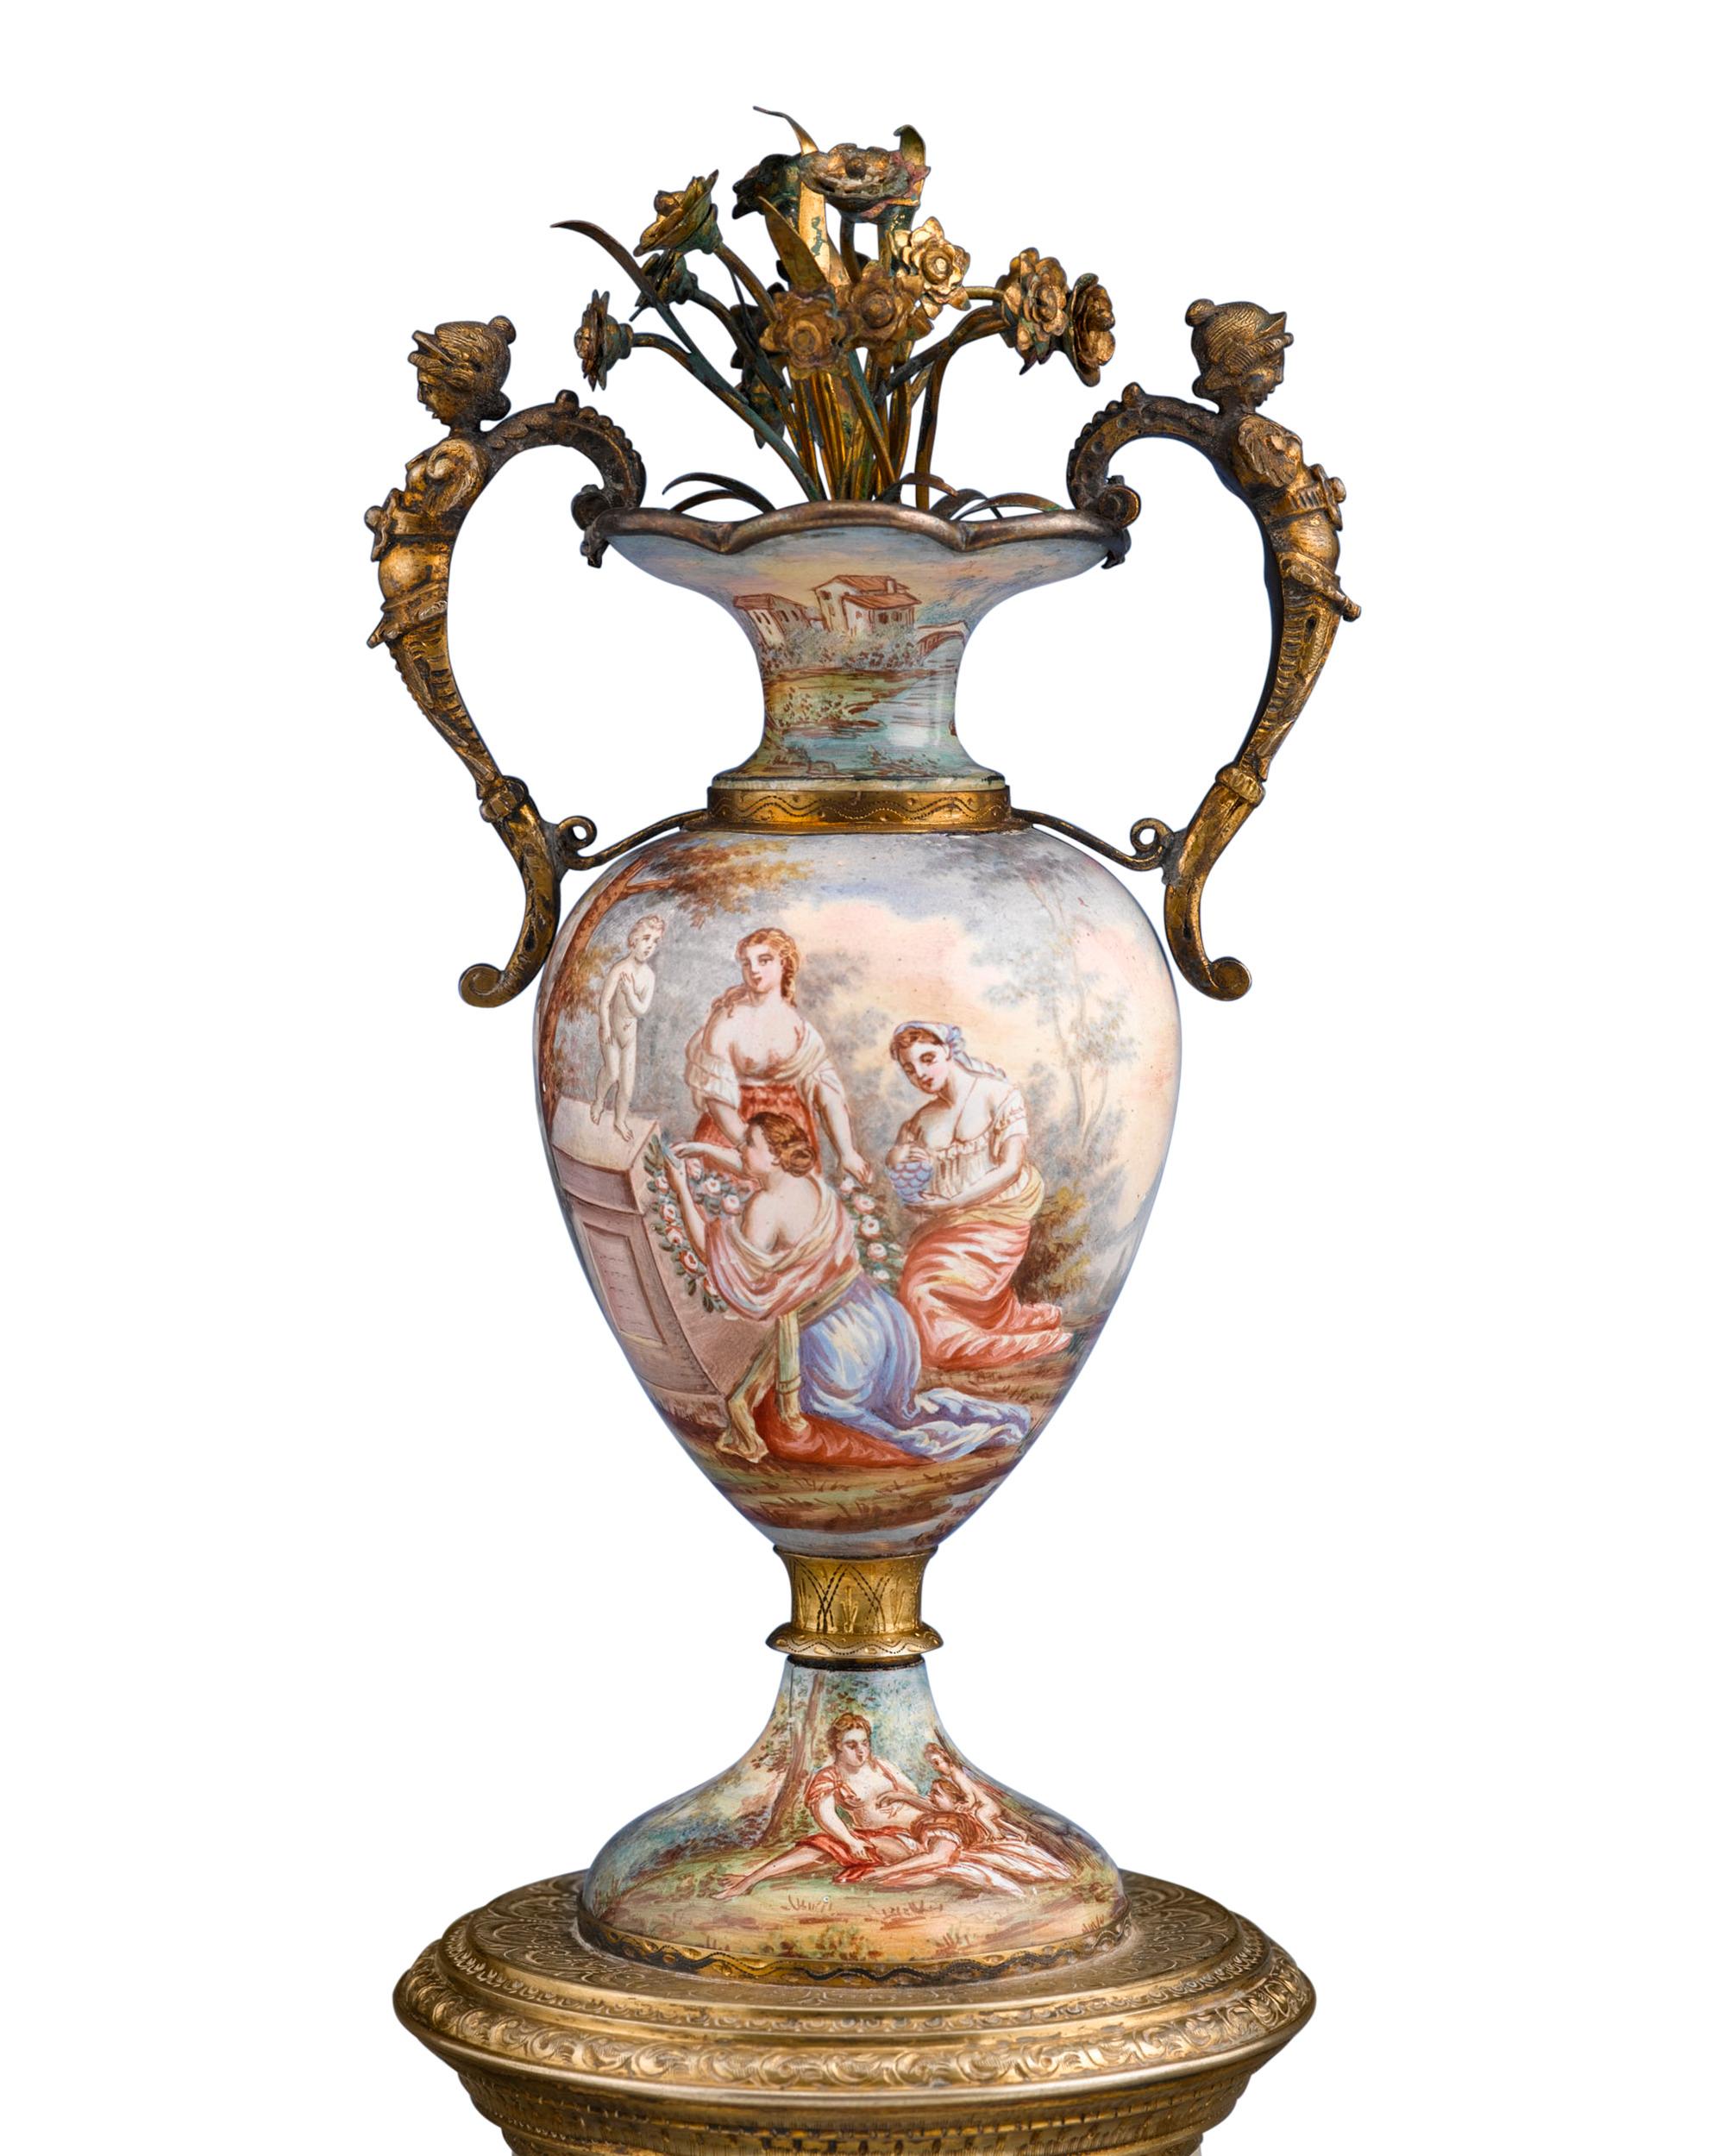 Austrian Viennese Silver-Gilt and Enamel Vase